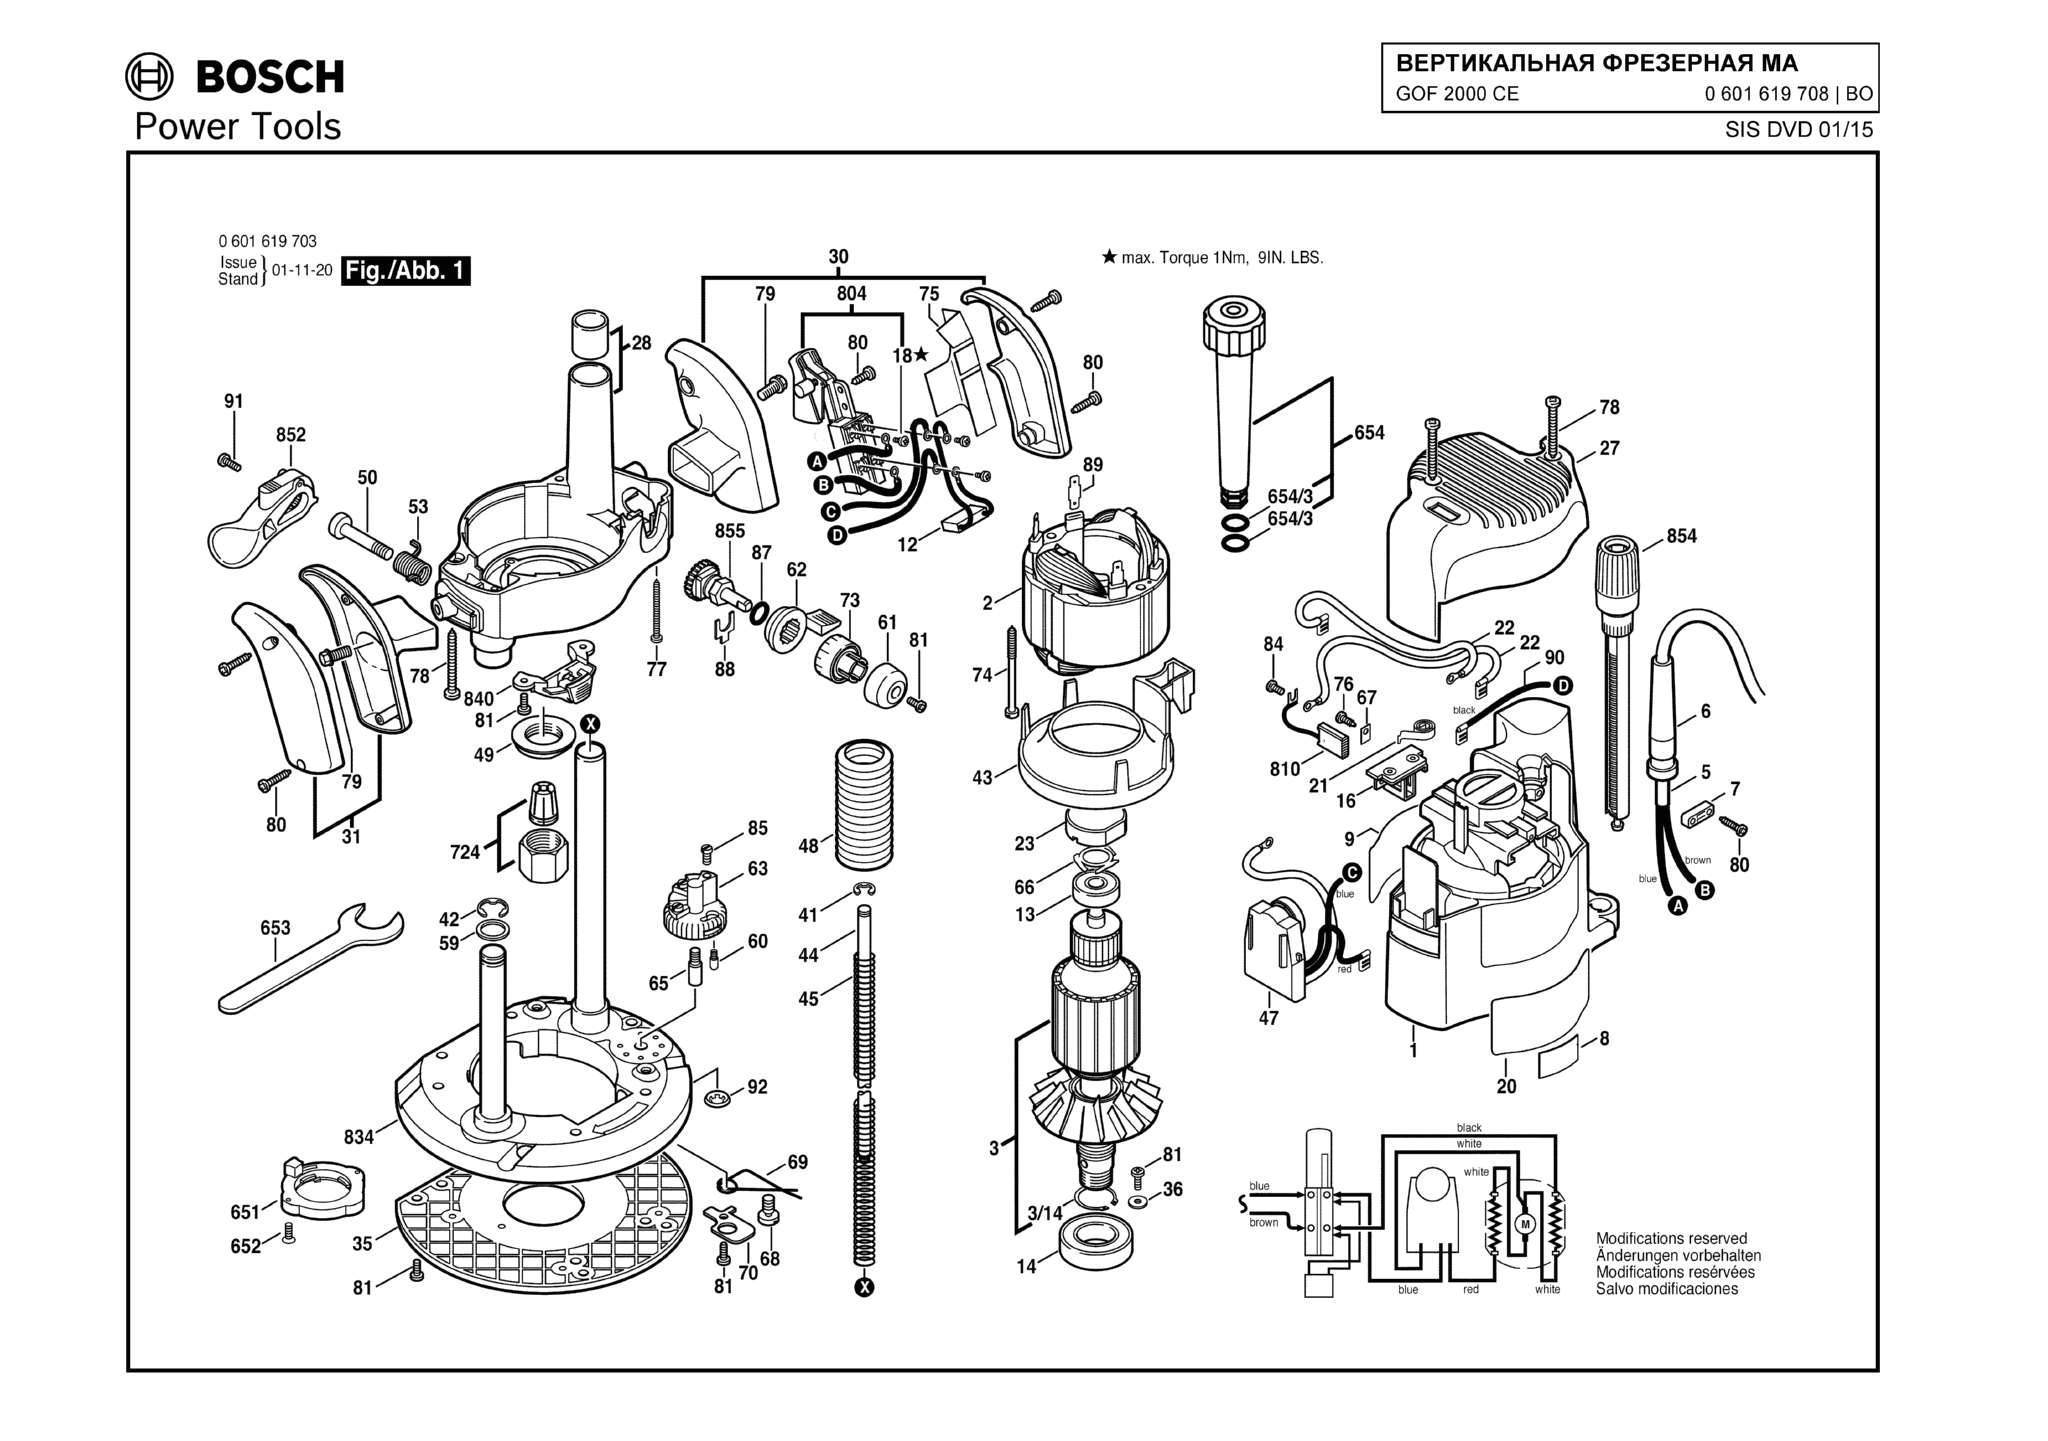 Запчасти, схема и деталировка Bosch GOF 2000 CE (ТИП 0601619708)